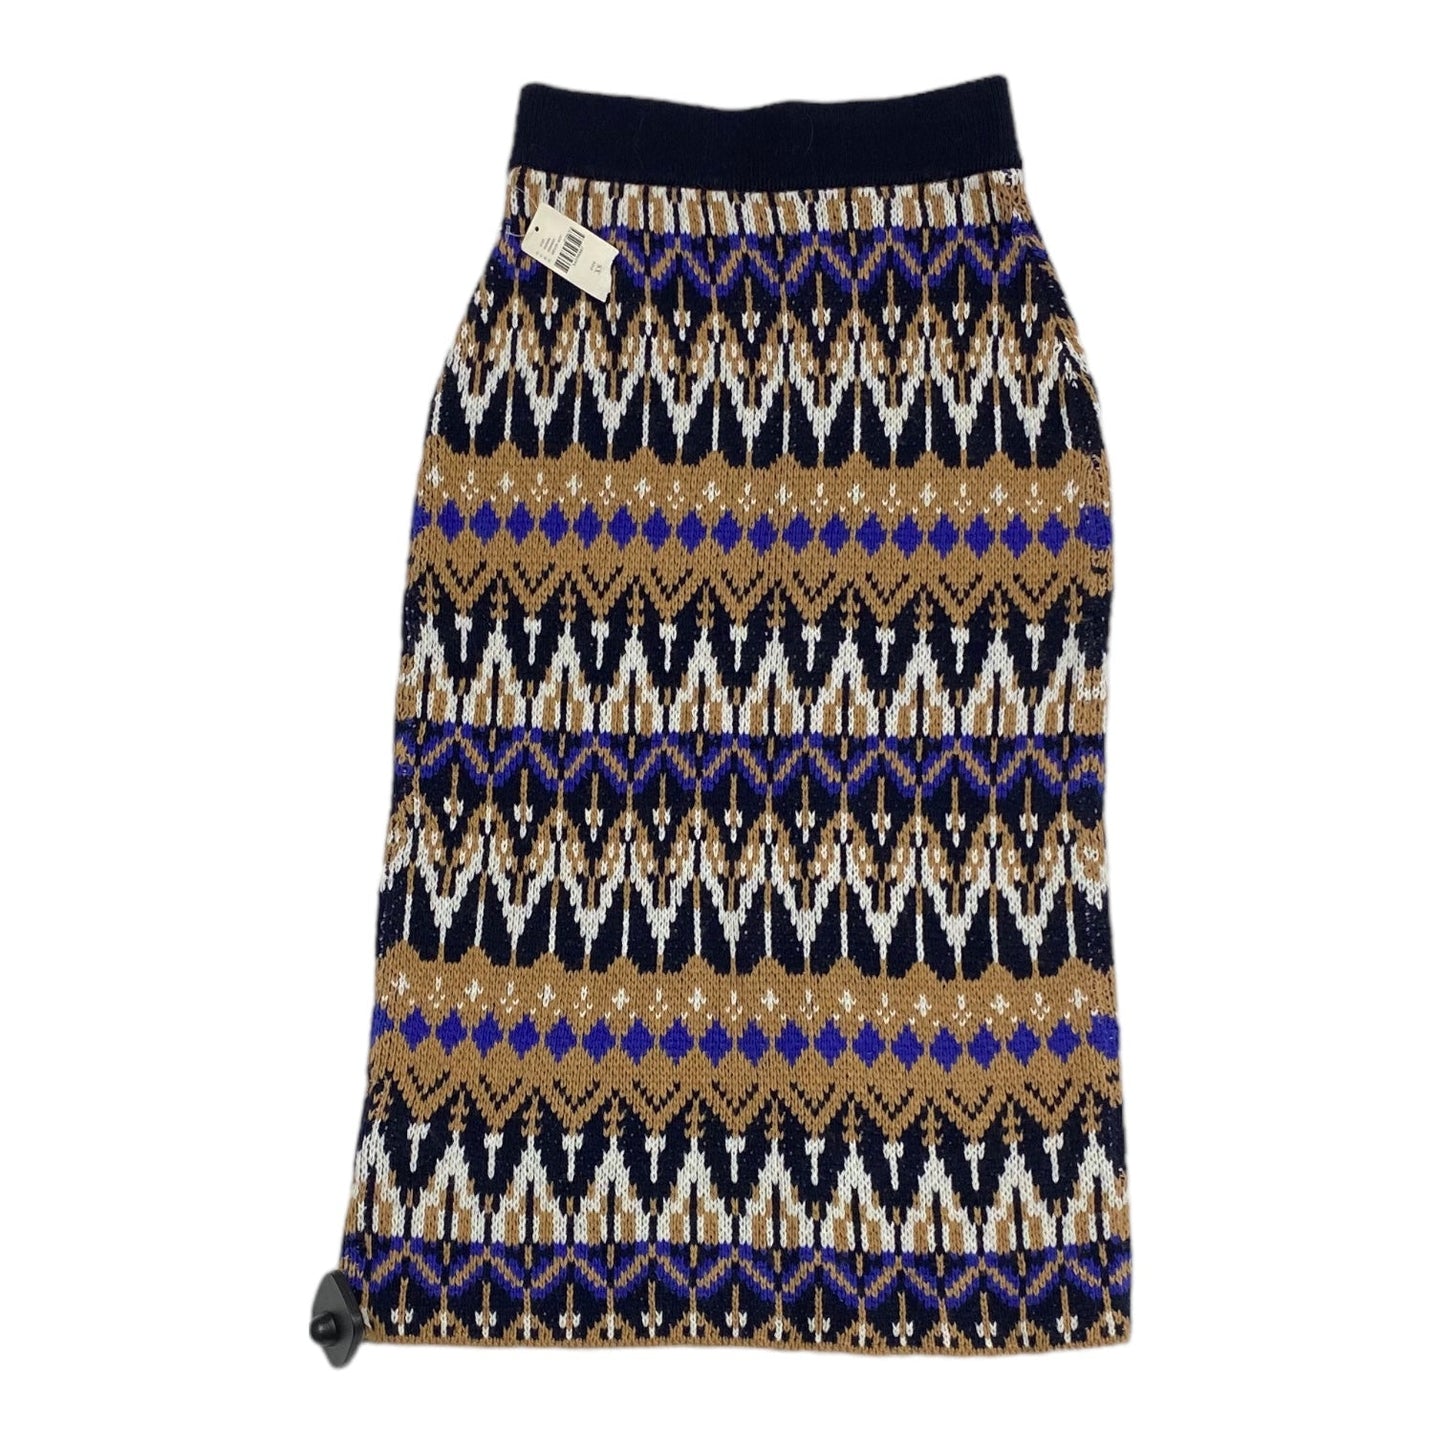 Multi-colored Skirt Midi Anthropologie, Size Xs